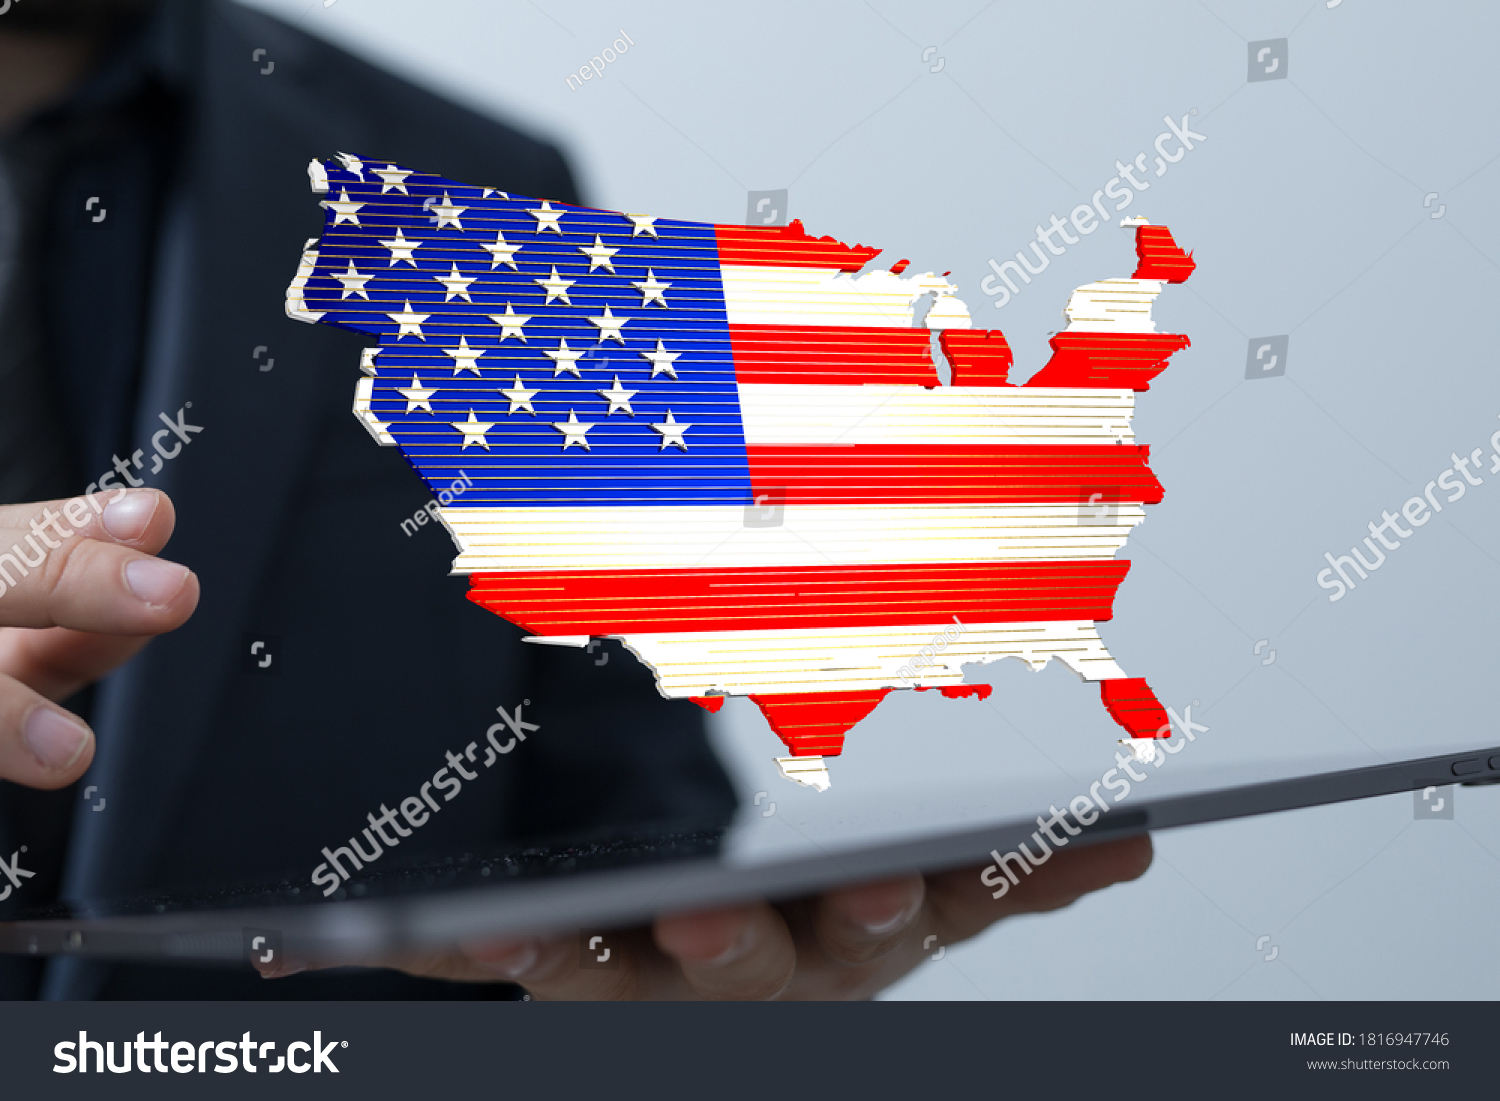 Stock Photo Patriotic Usa Flag Map Concept Digital Banner 1816947746 